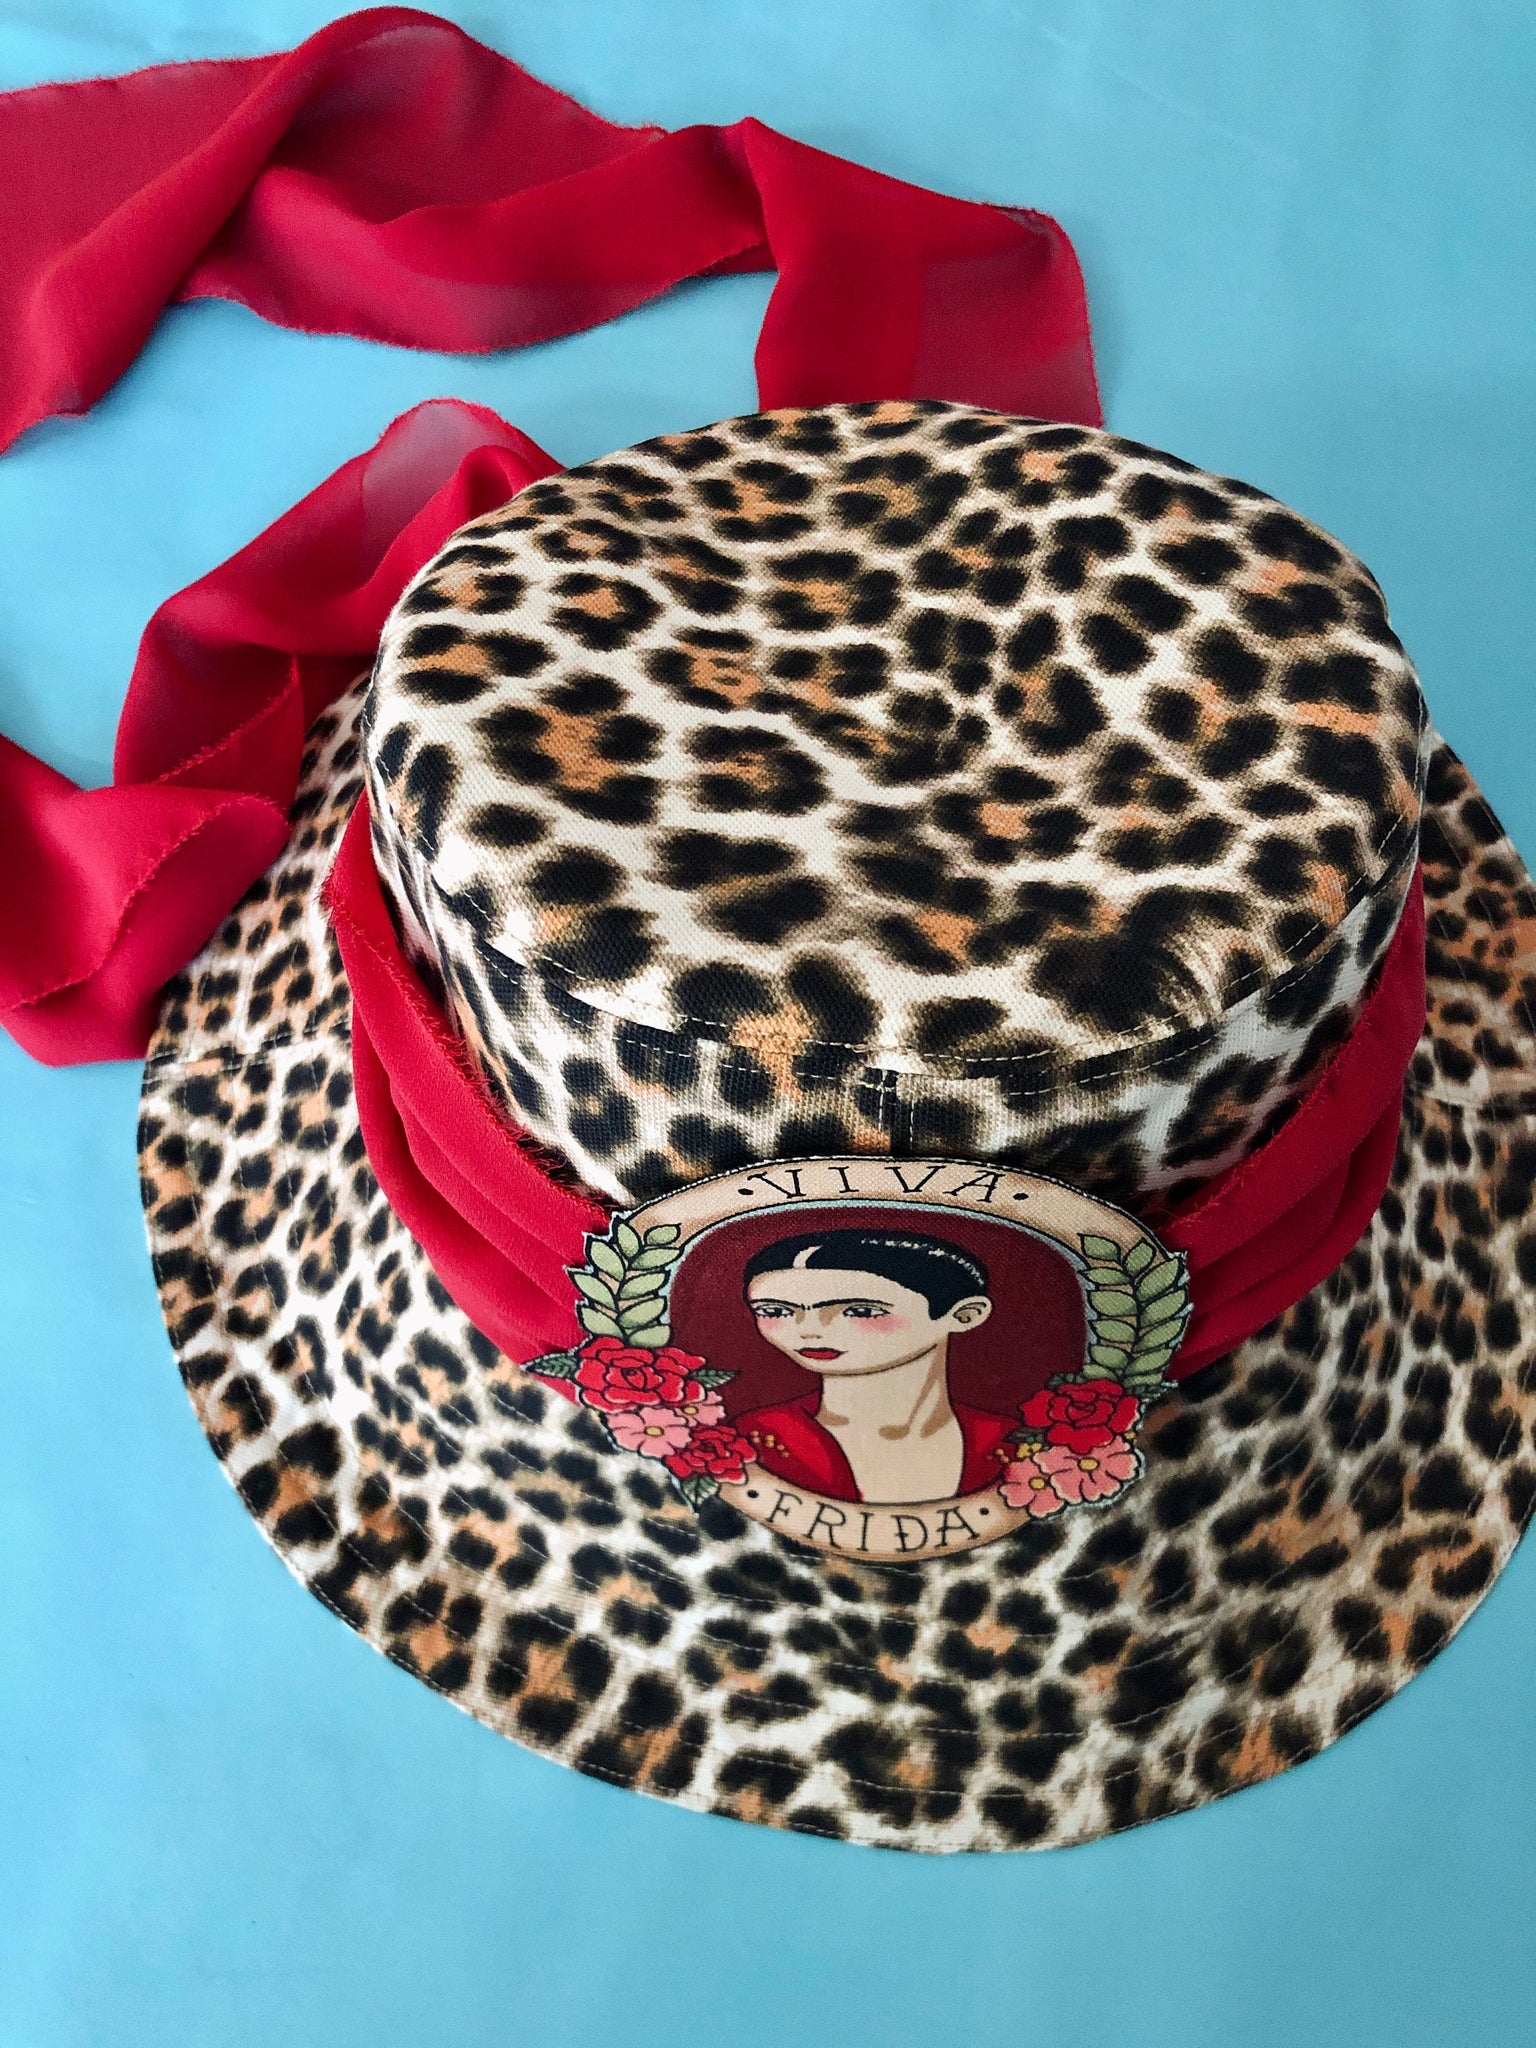 Bucket Hat with Animal Print and Silk Ribbon "Frida Kahlo"